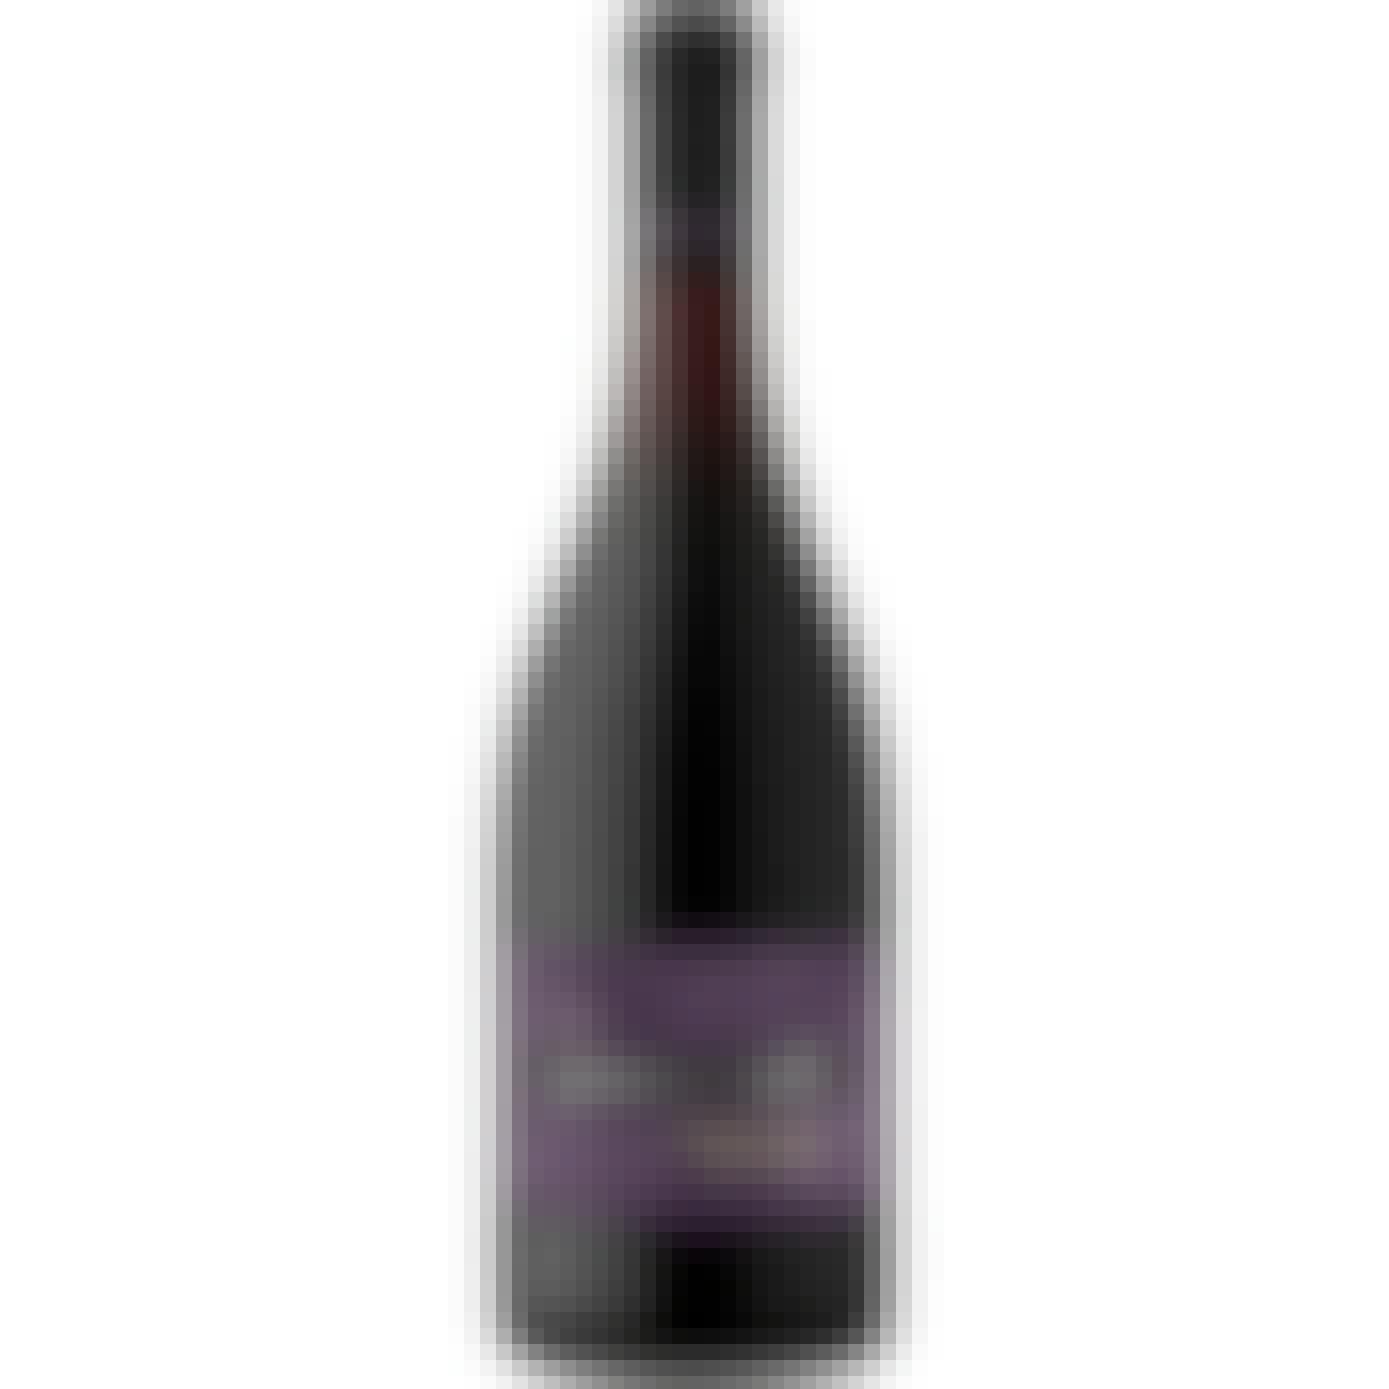 Penner-Ash Willamette Valley Pinot Noir 2021 750ml